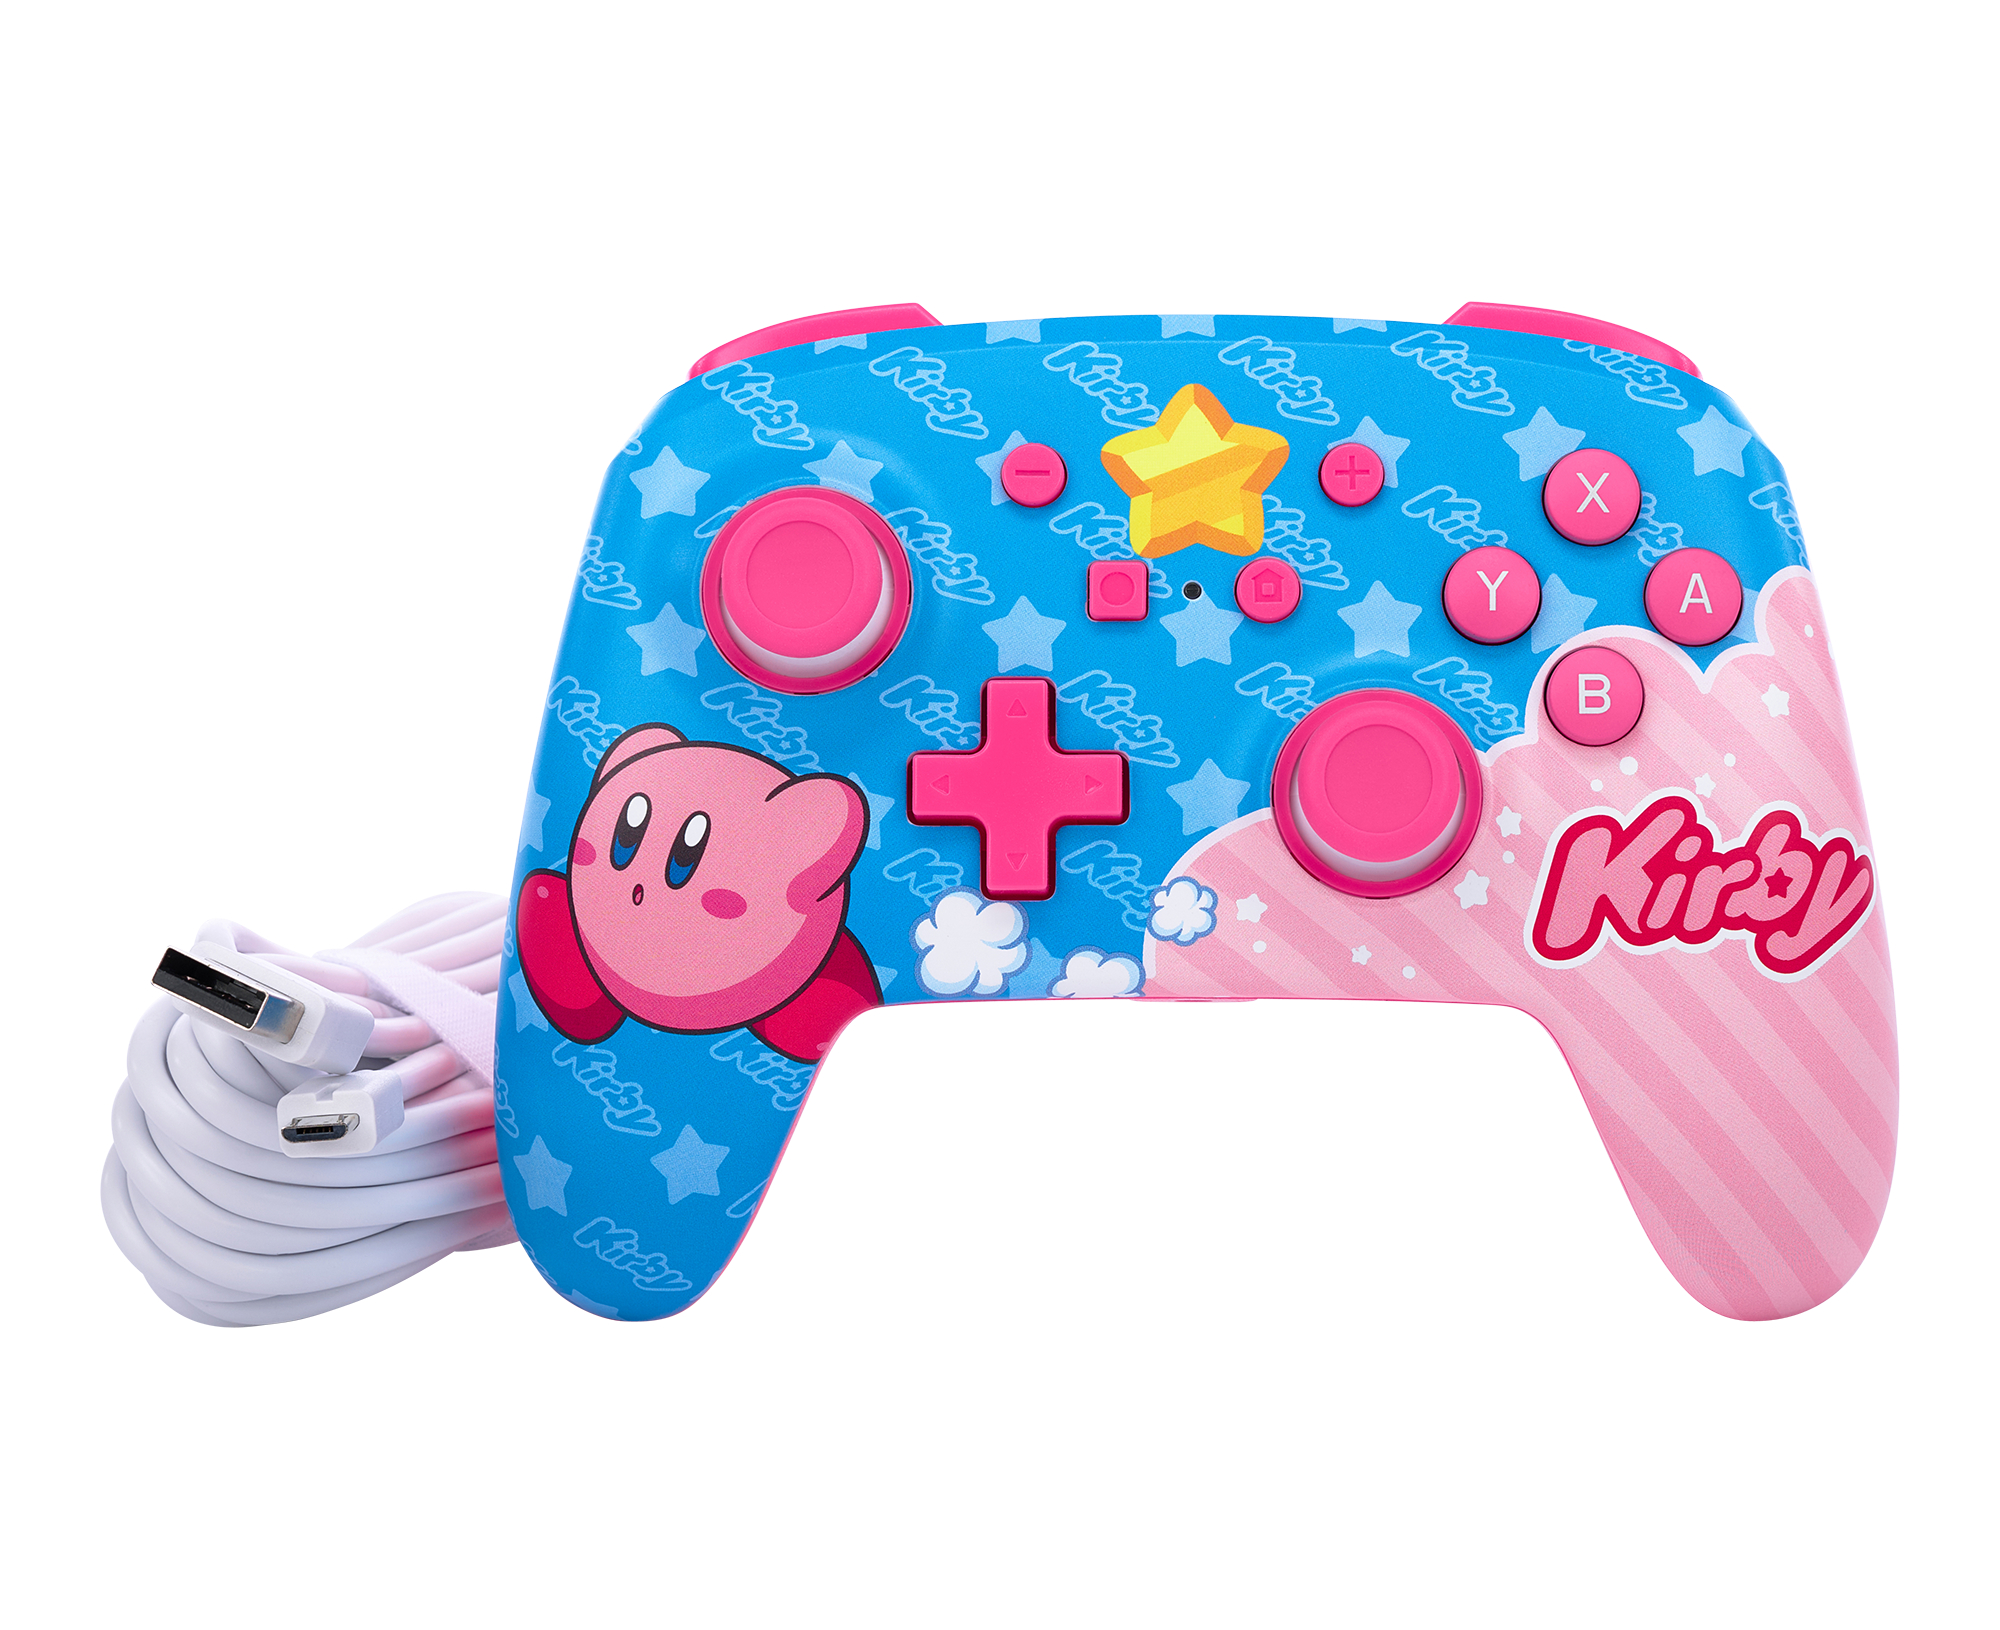 POWERA kabelgebundener Controller- Kirby Controller Nintendo Switch OLED, Mehrfarbig Nintendo für Switch